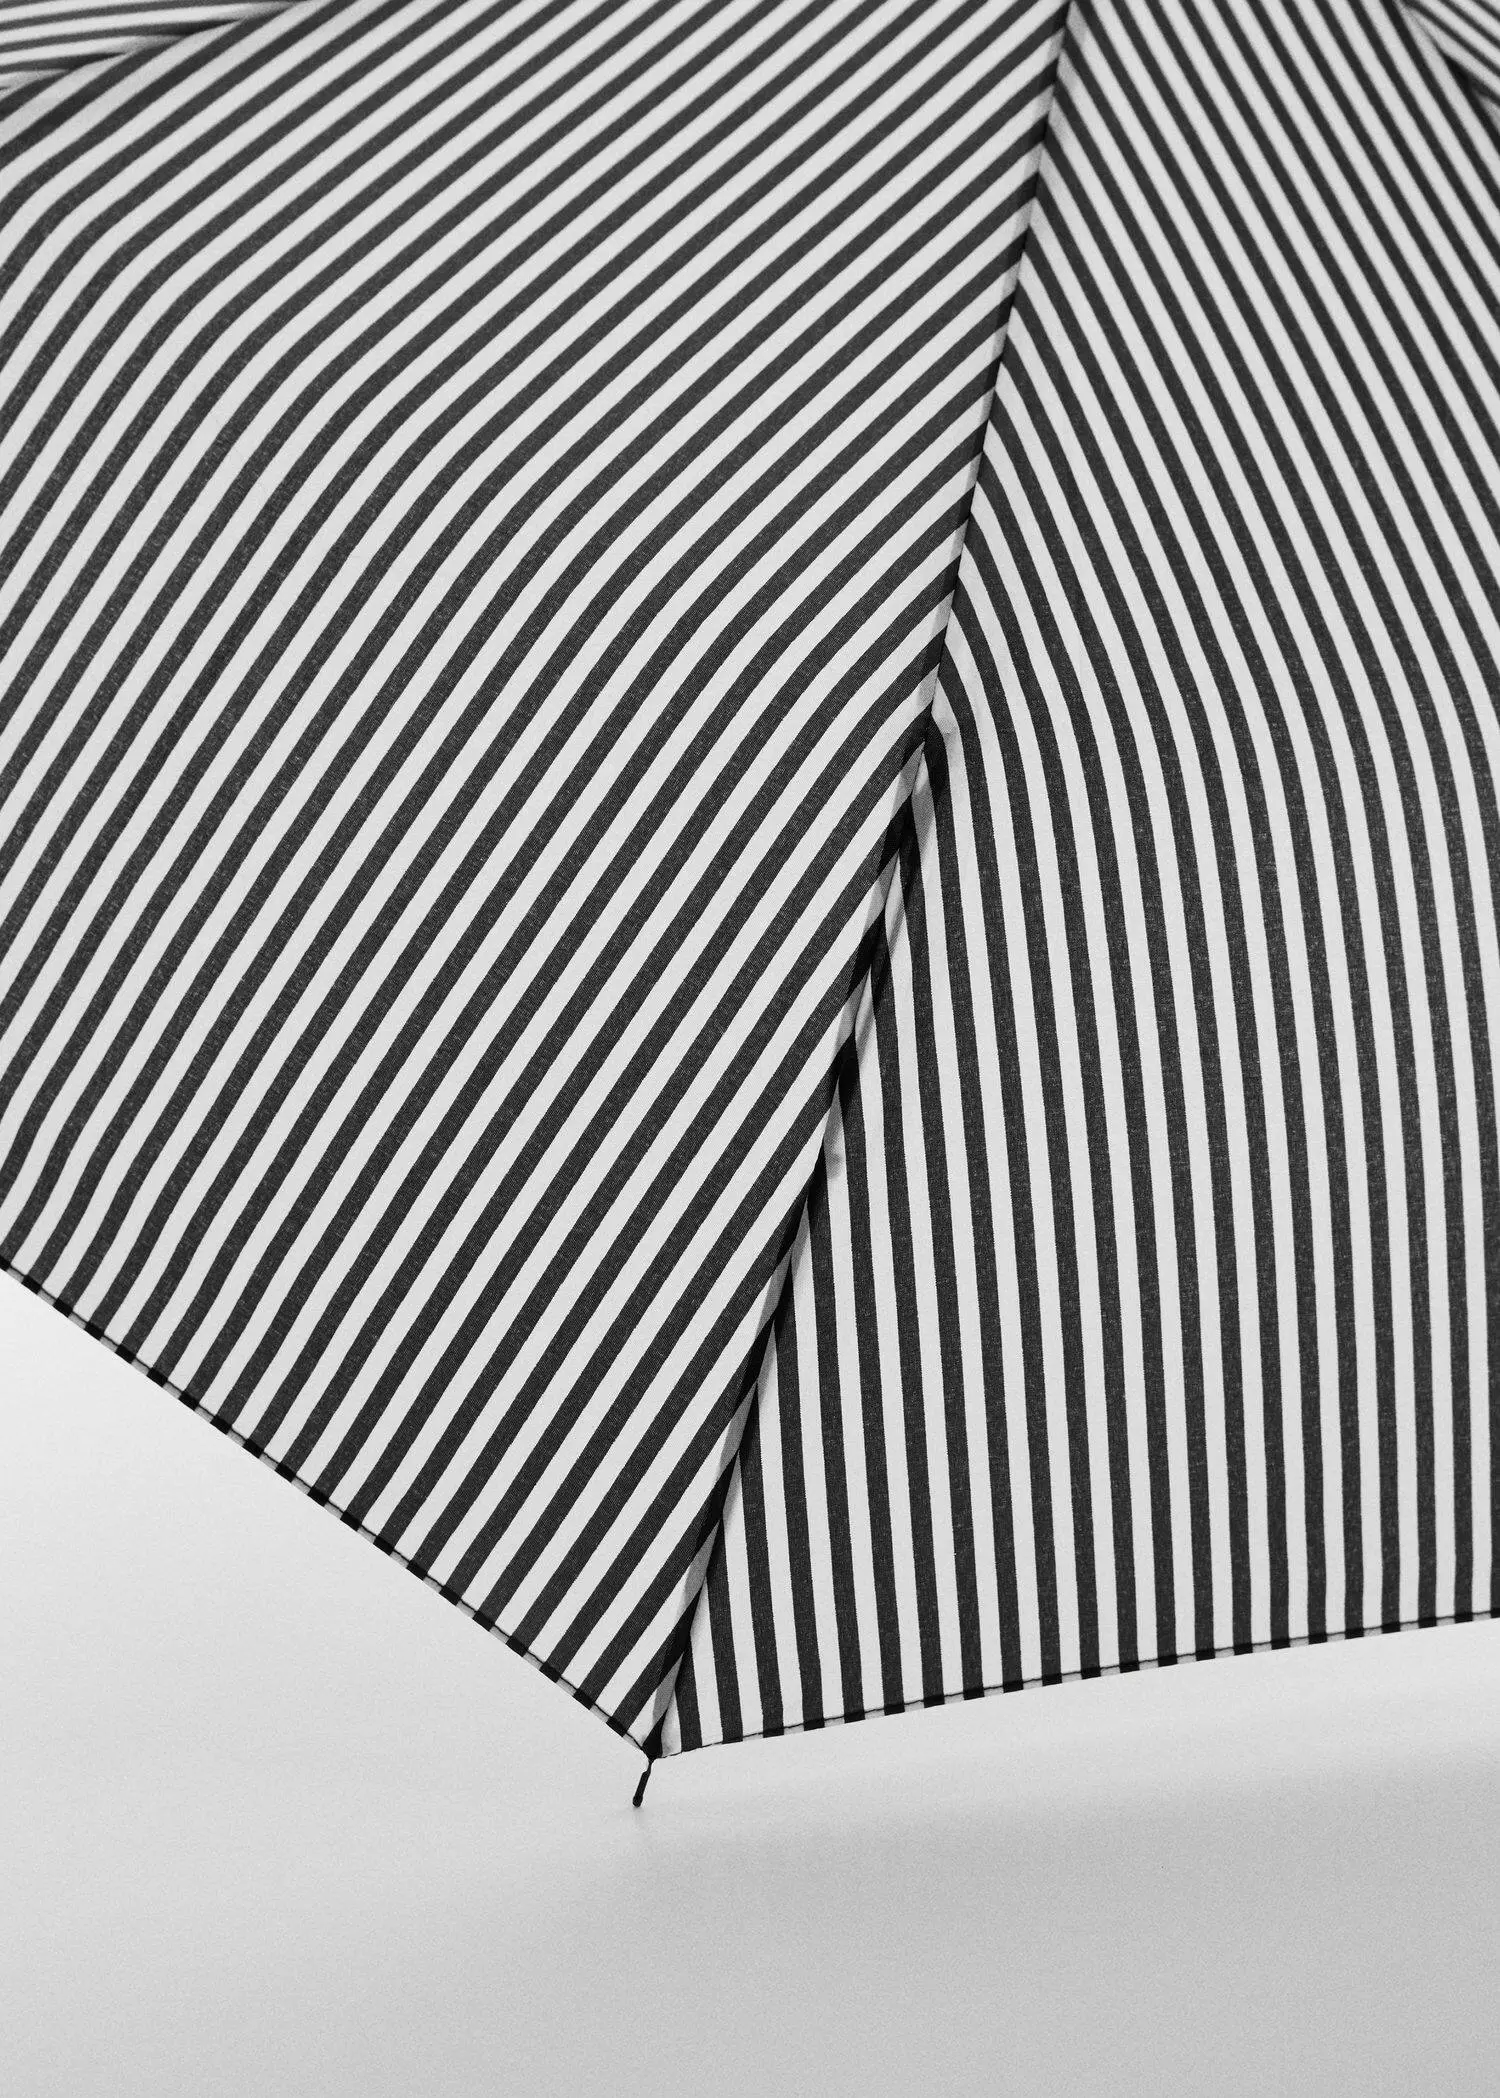 Mango Striped folding umbrella. a close-up view of a black and white striped umbrella. 